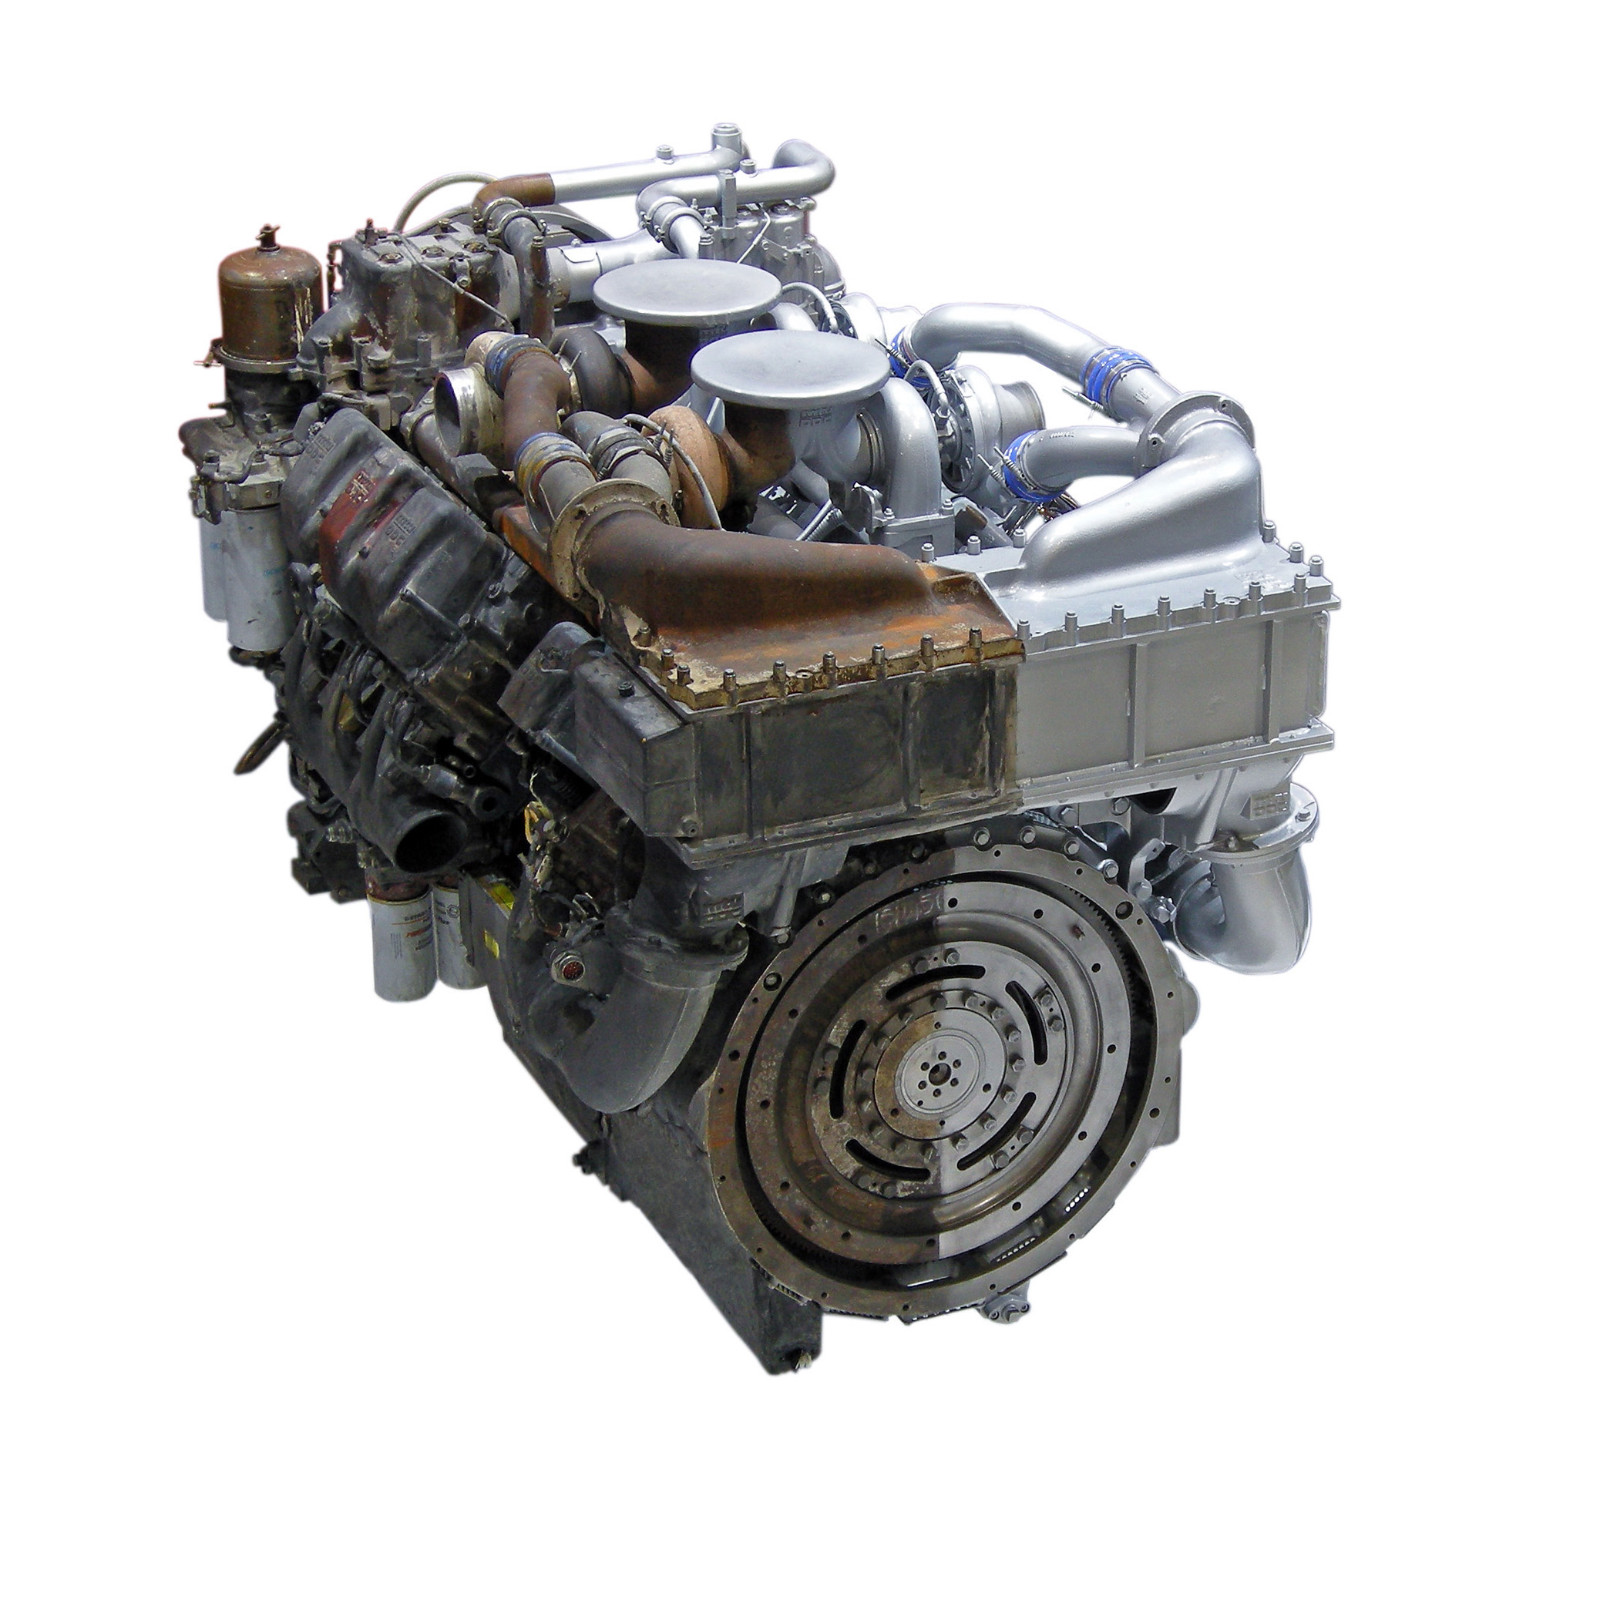 mtu engine parts manufacturers-mtu engine parts supplier